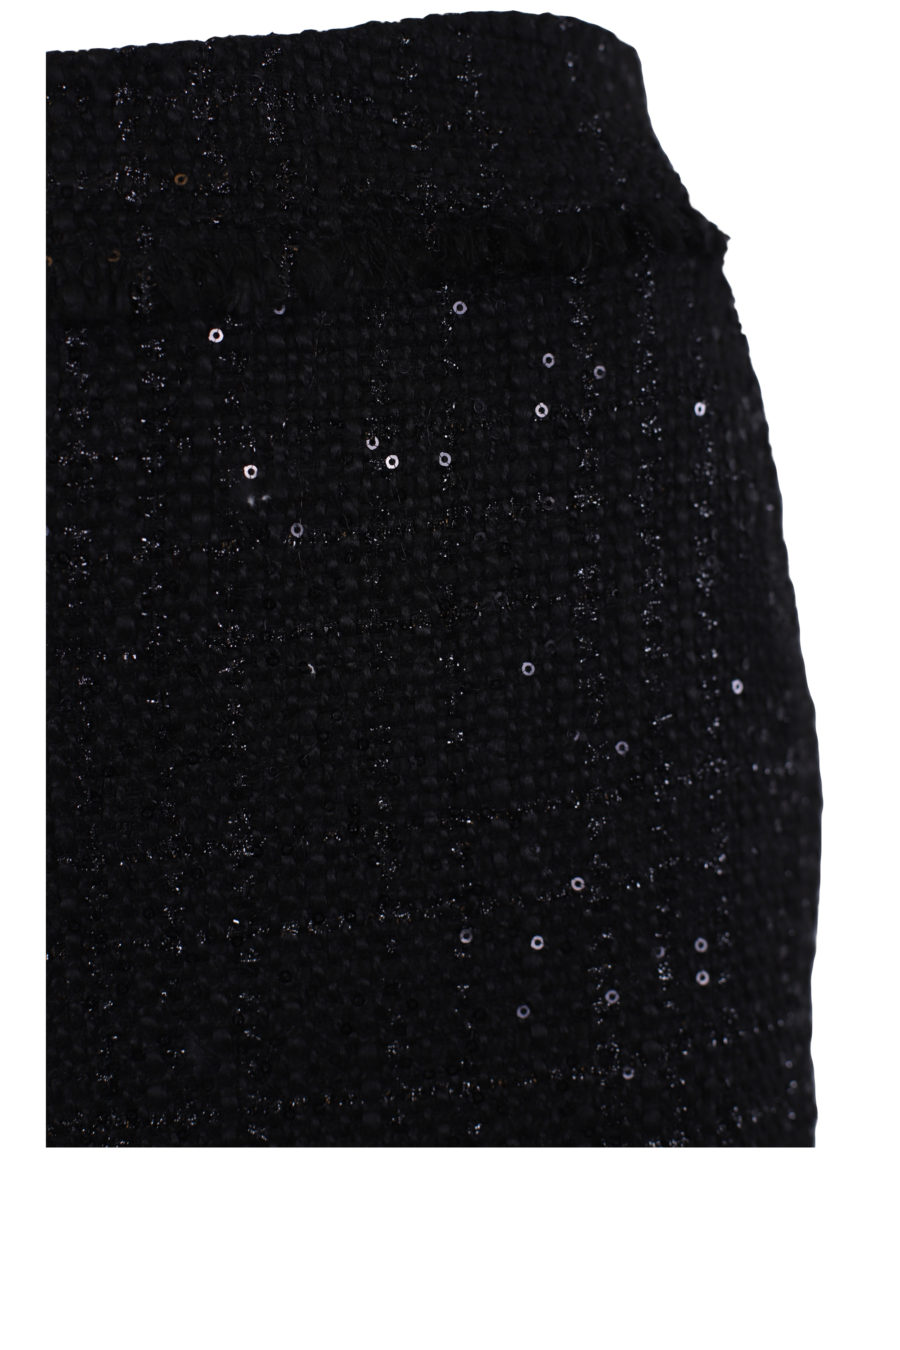 Falda negra con cinta de bouclé - IMG 0358